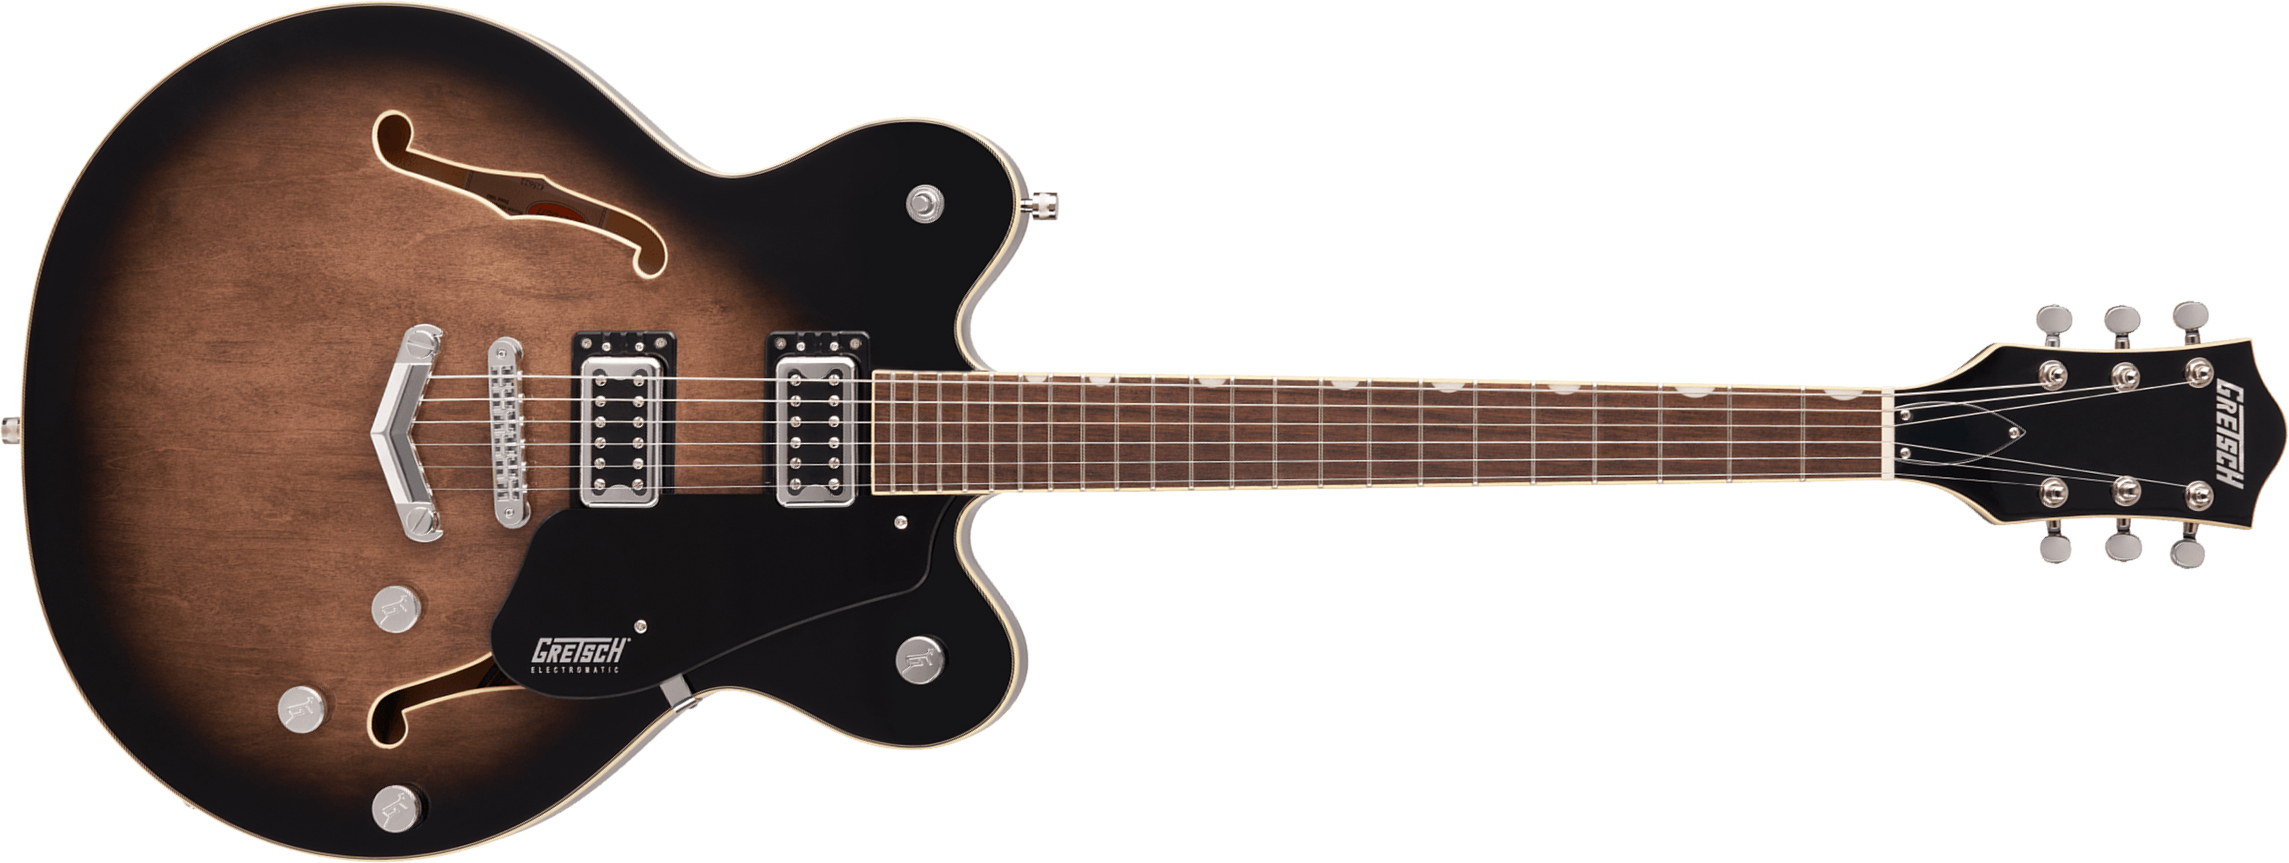 Gretsch G5622 Center Bloc Double Cut V-stoptail Electromatic Hh Ht Lau - Bristol Fog - Semi-hollow electric guitar - Main picture